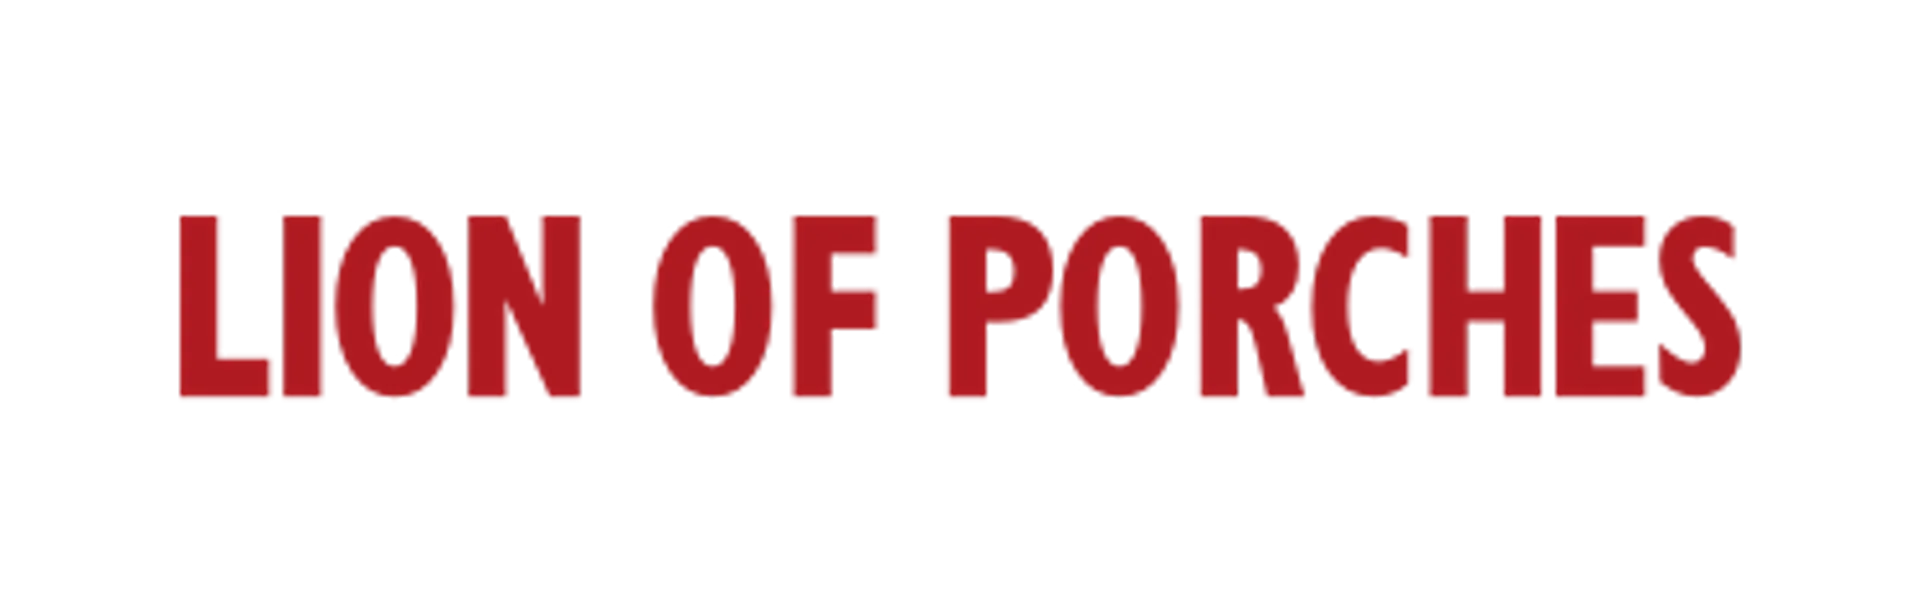 LION OF PORCHES logo